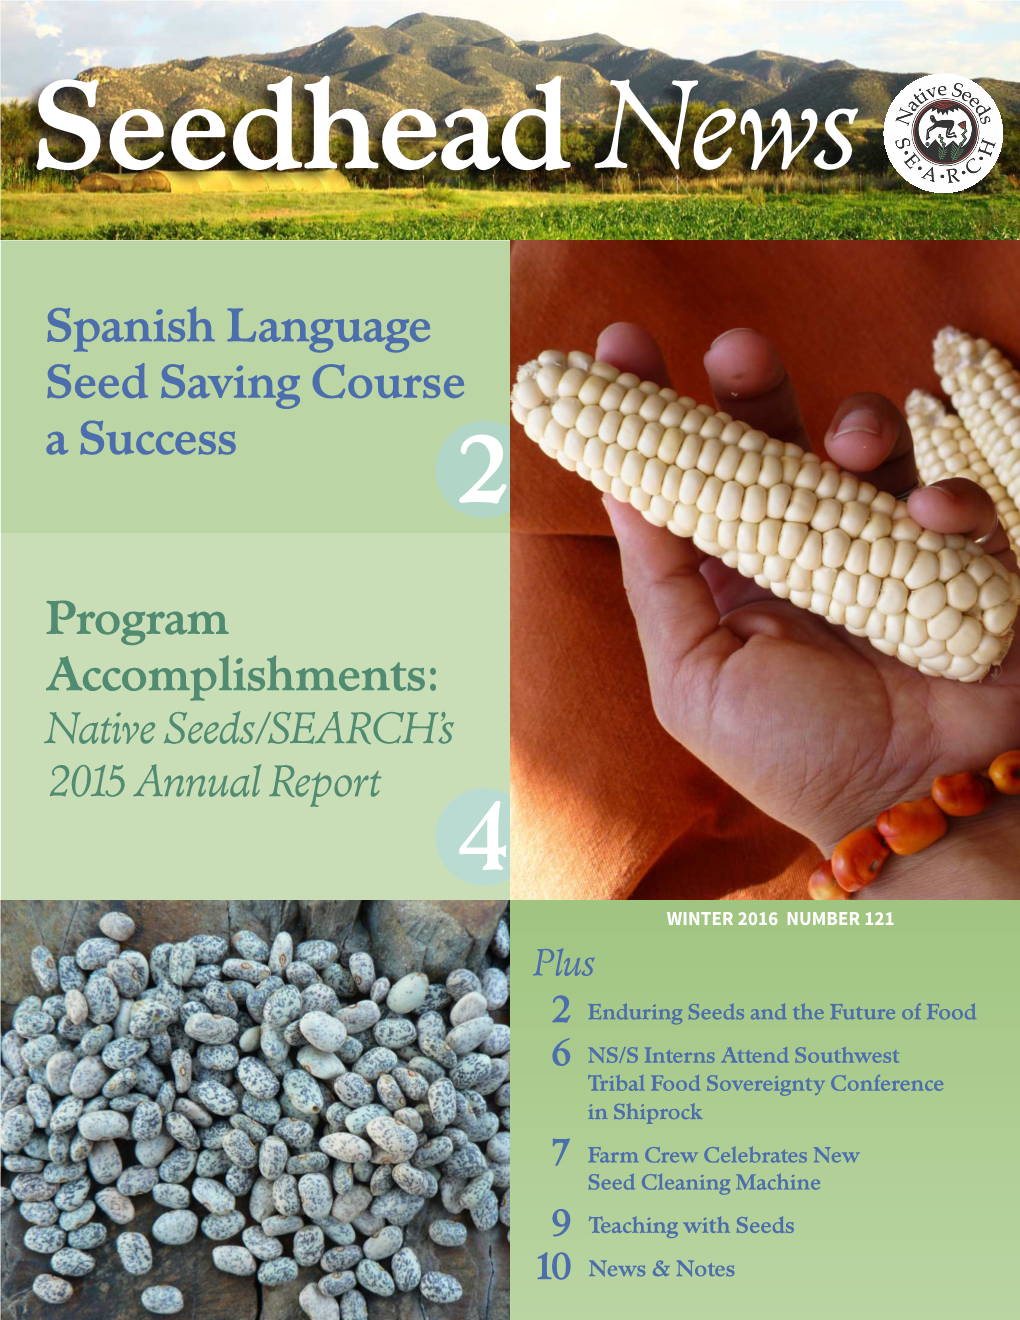 Spanish Language Seed Saving Course a Success Program Accomplishments